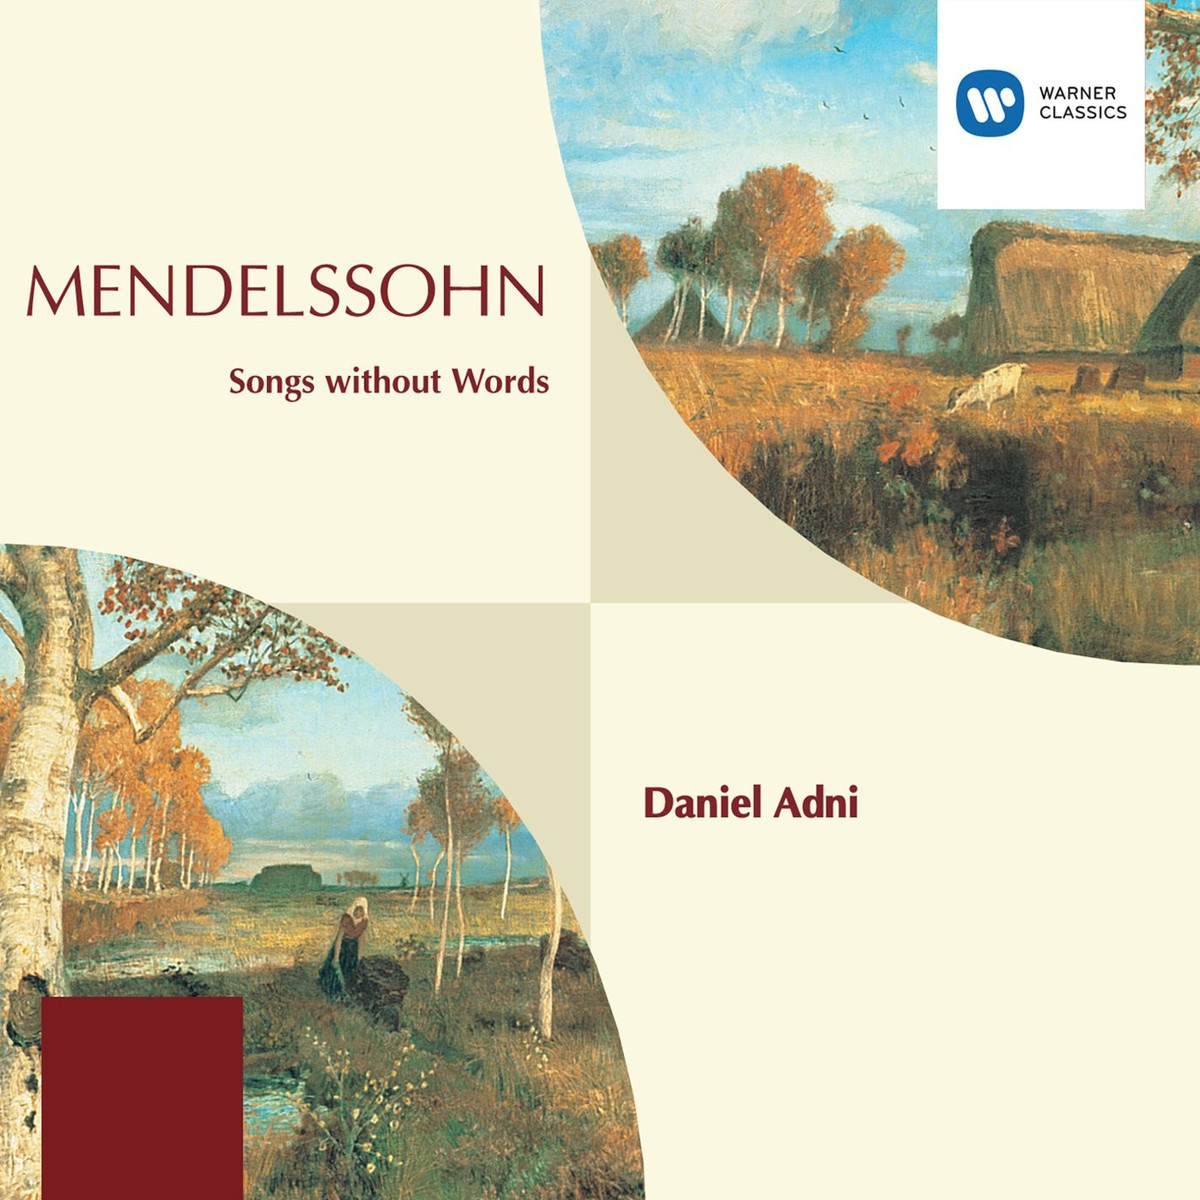 Songs without Words (1996 Digital Remaster): Andante sostenuto in G minor, Op. 19 No. 6. 'Venetian Gondola Song'